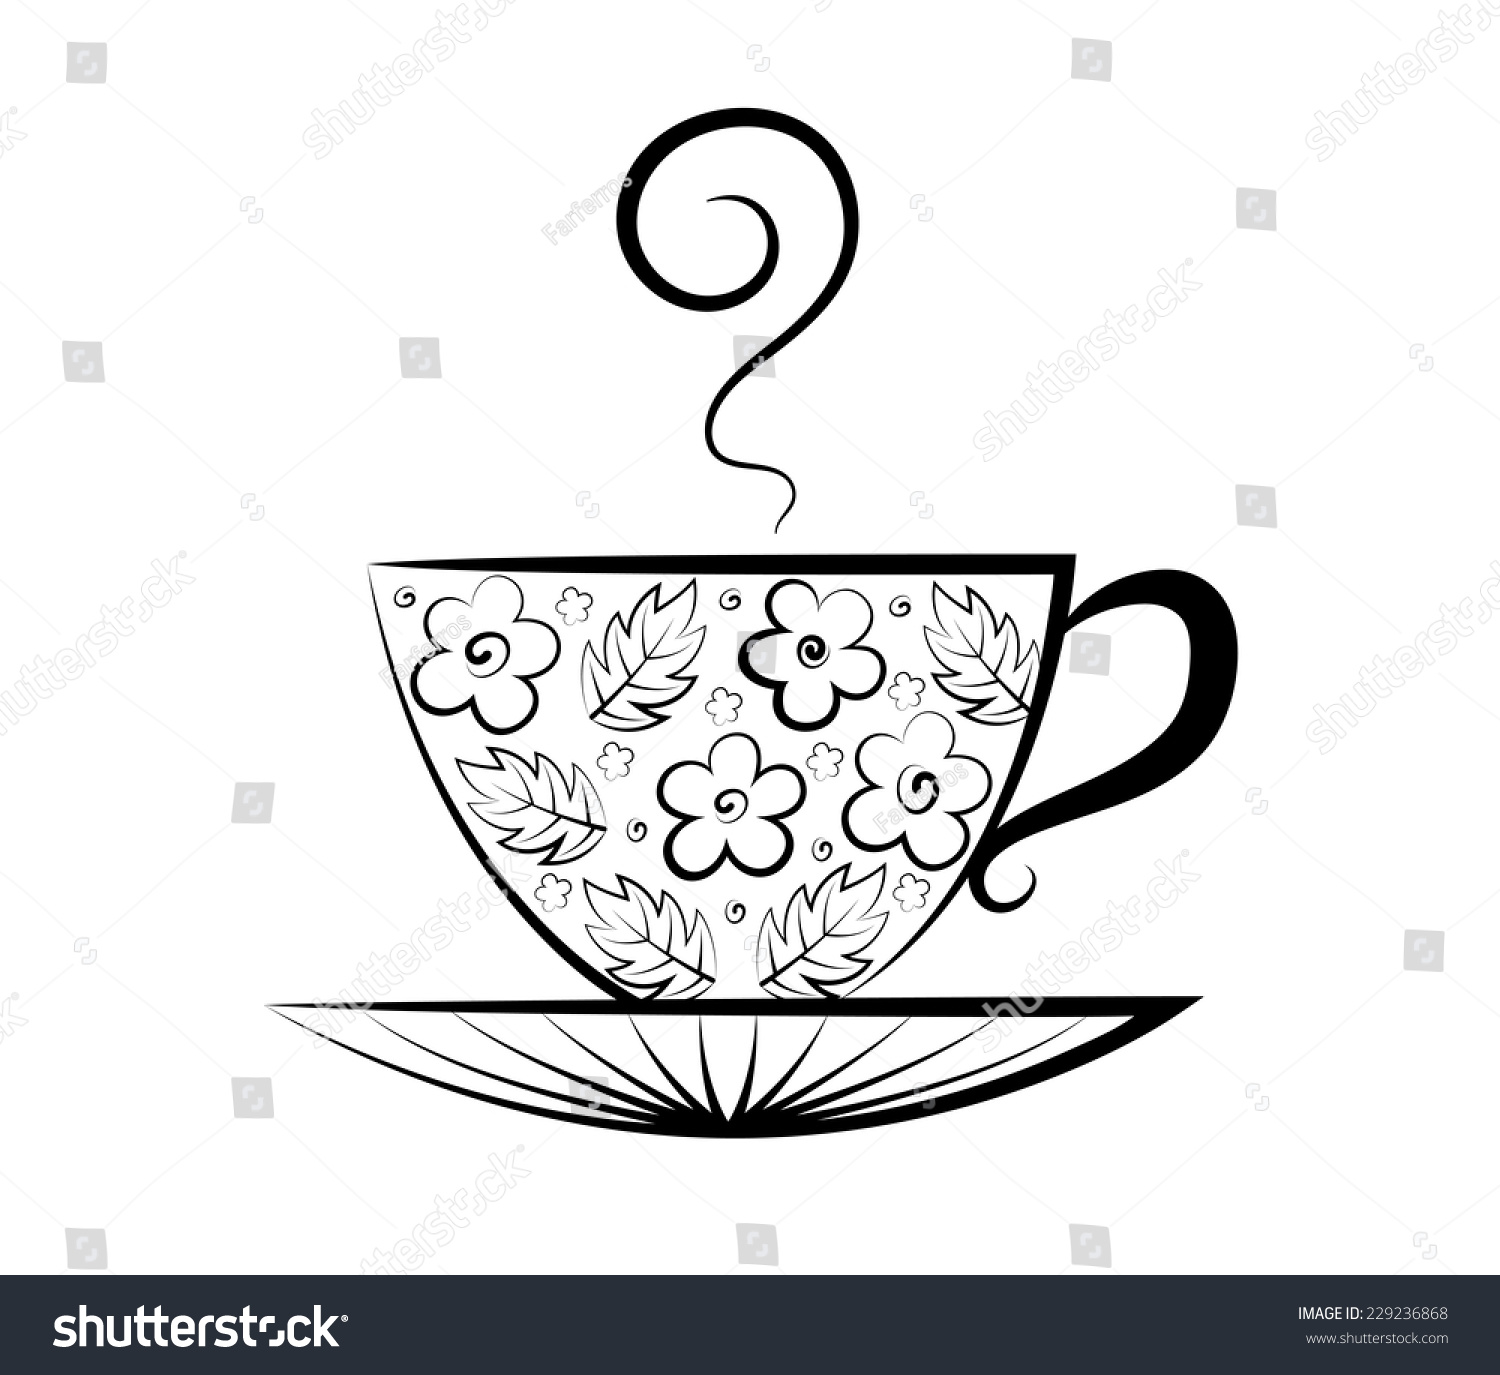 Image for coffee mug cartoon